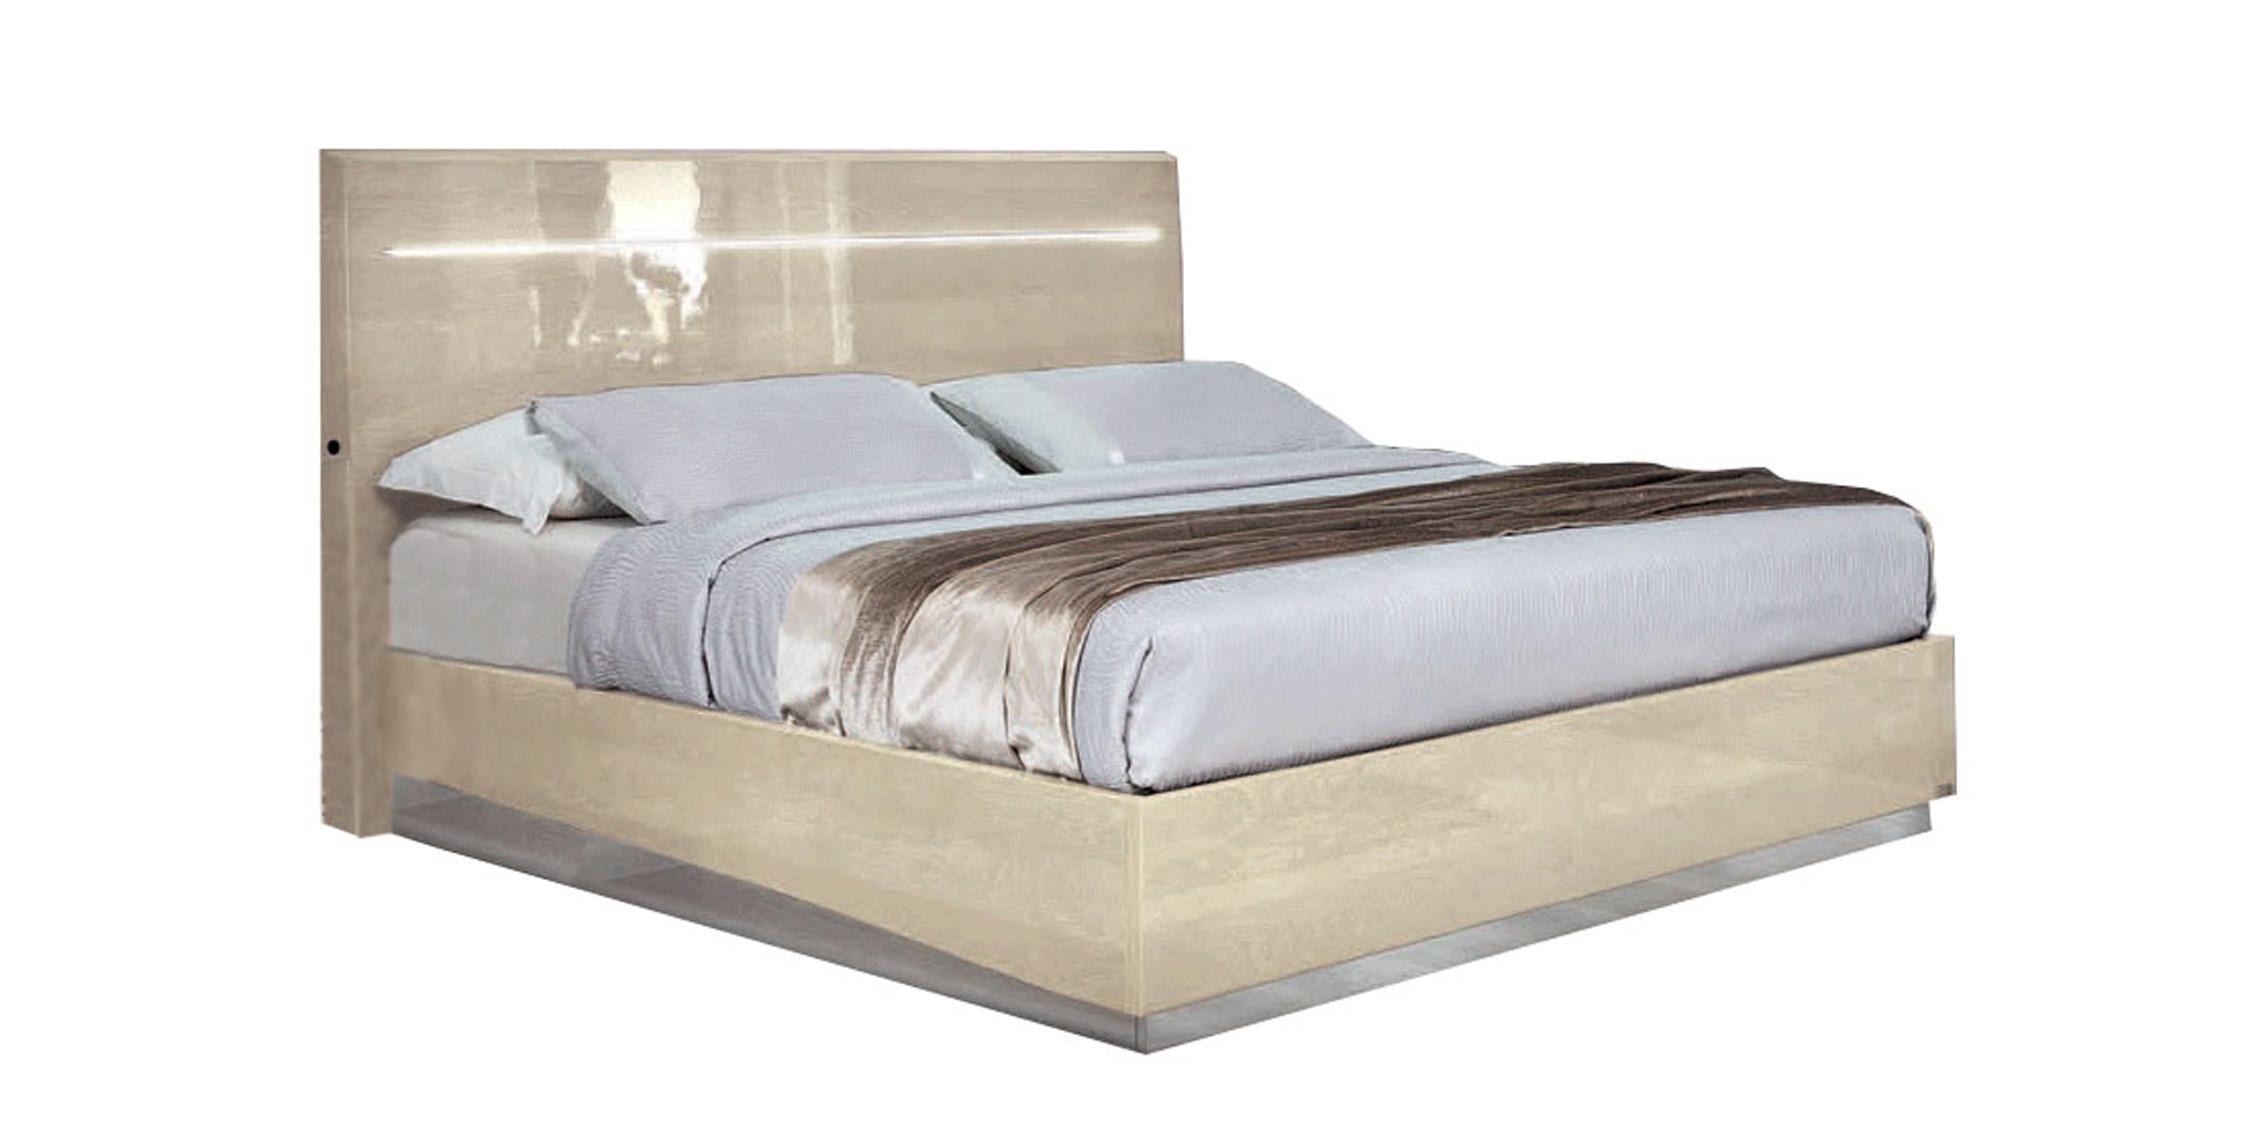 Contemporary, Modern Plarform bed IVORY Platinum Legno IVORY Platinum Legno-EK in Platinum, Ivory 